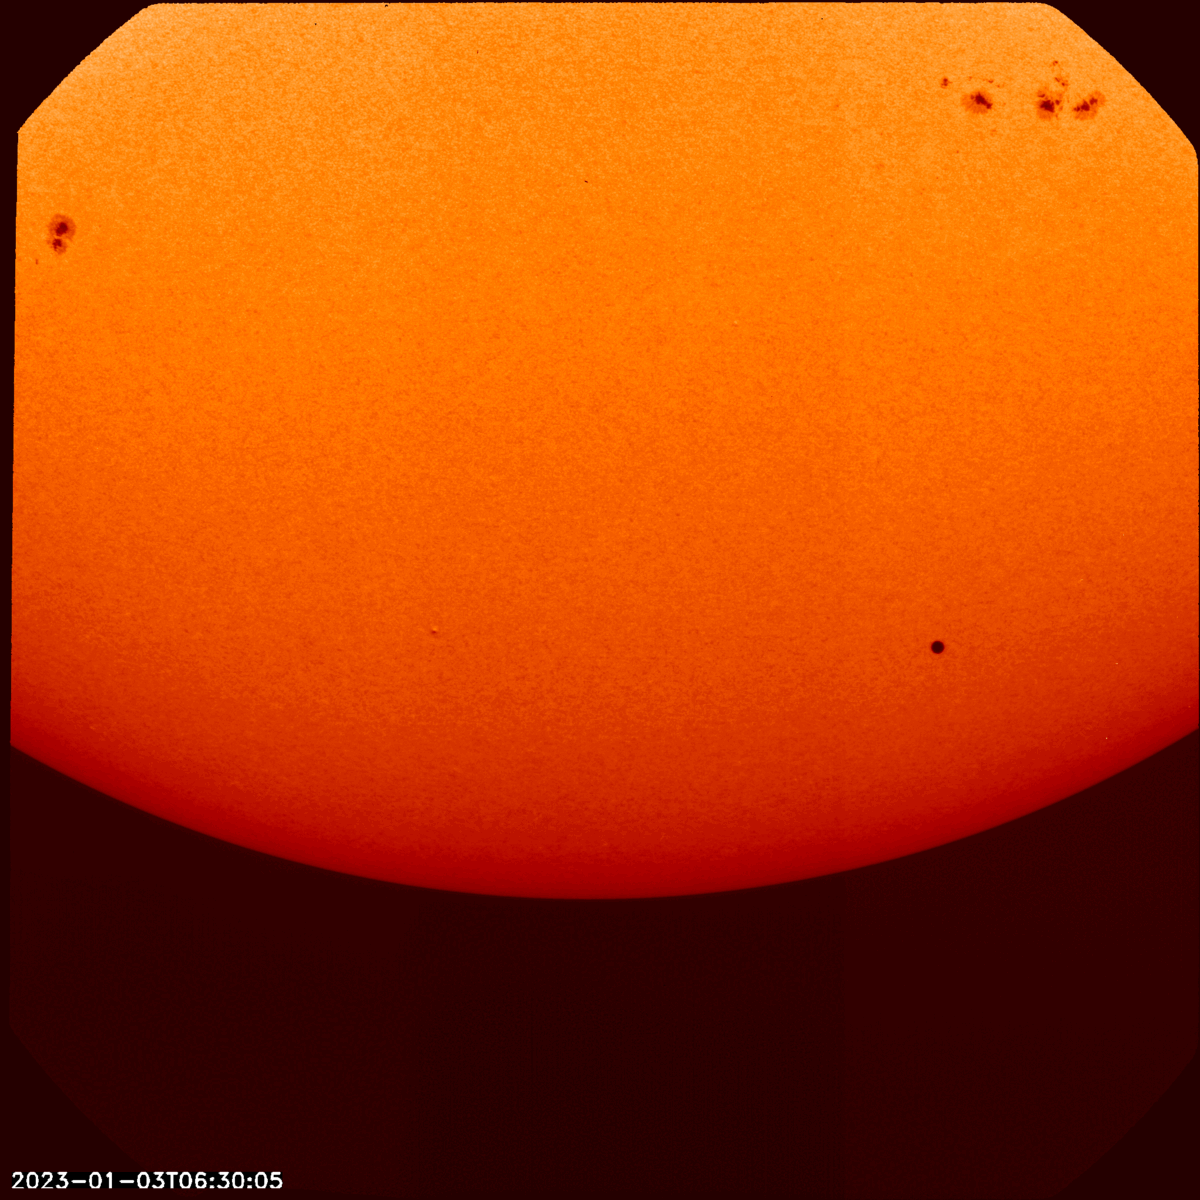 Mercury, seen as a black dot, transiting across the sun